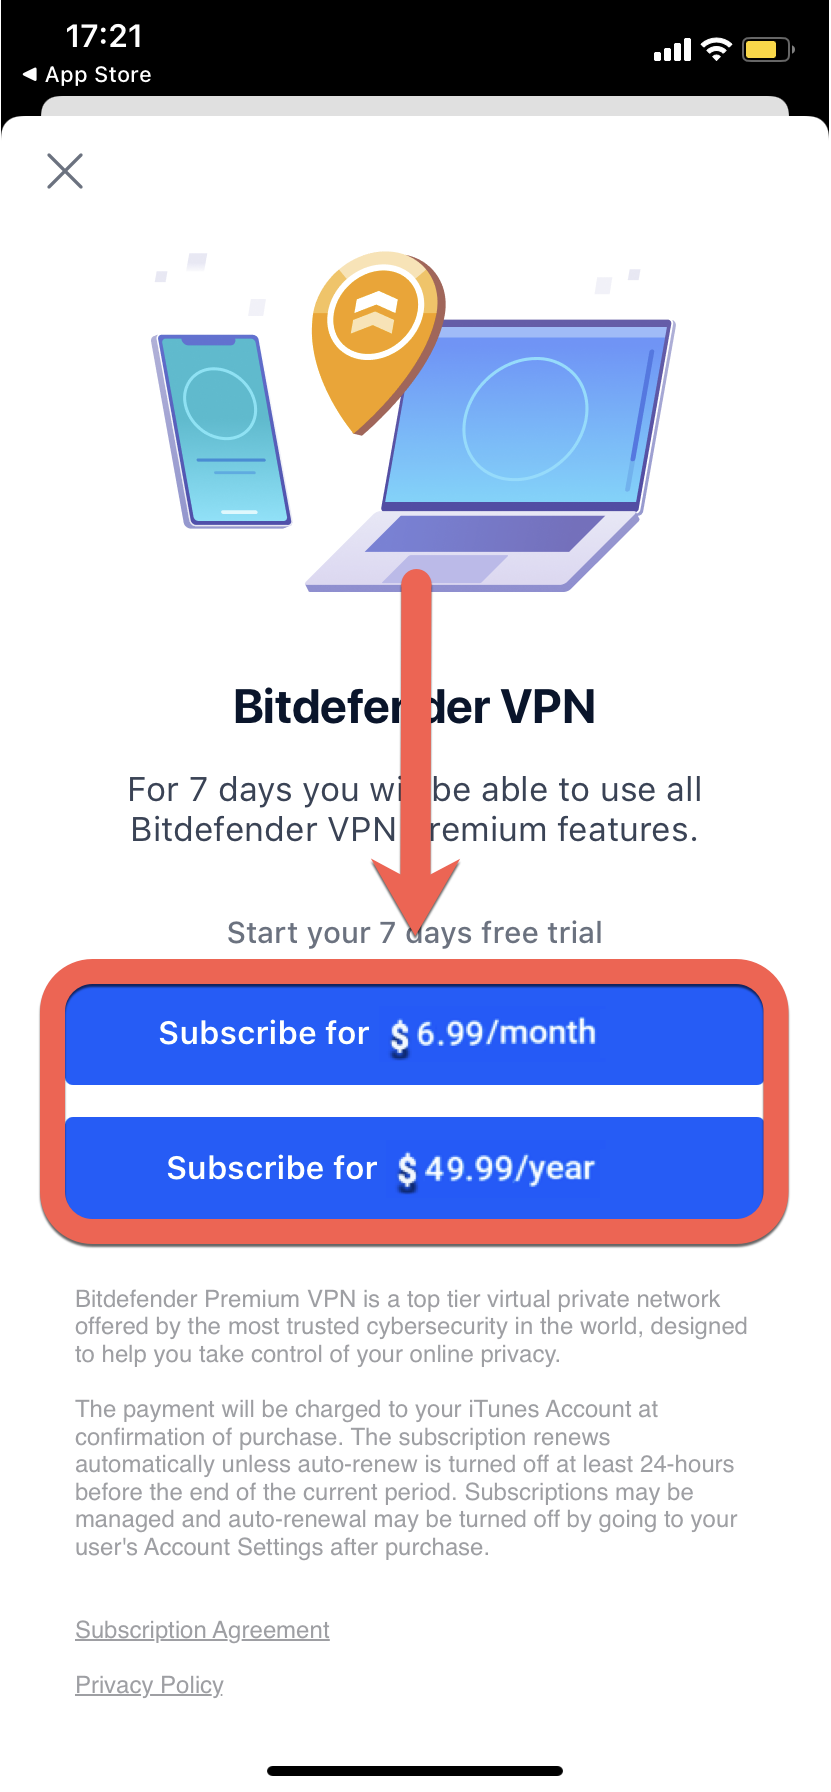 Subscriptions plans for Bitdefender Premium VPN on iOS 